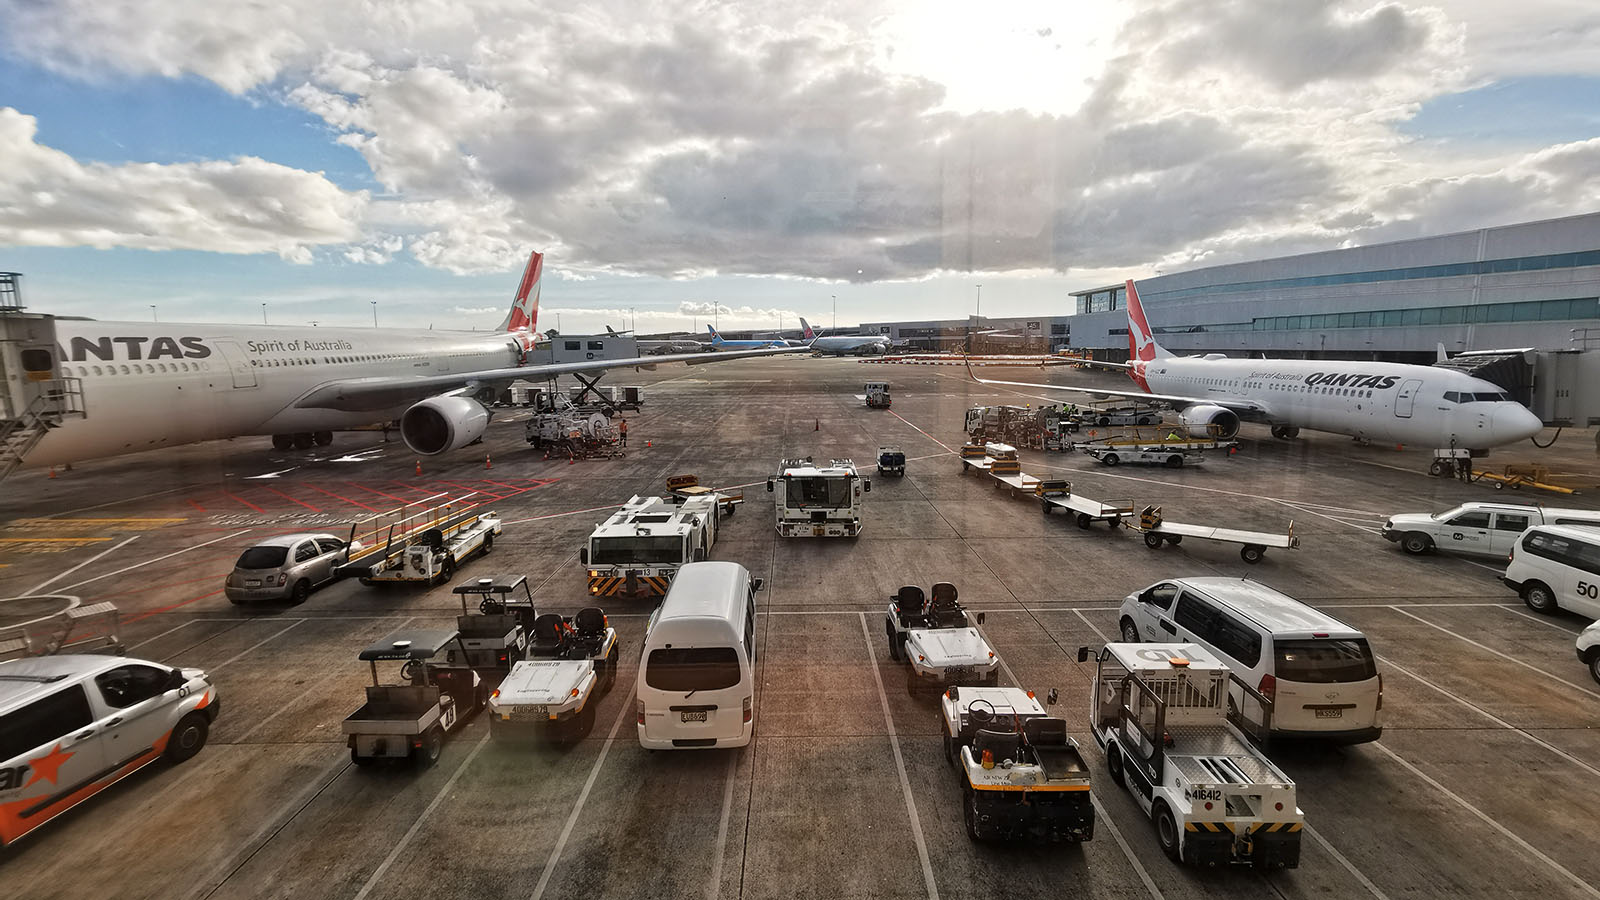 Qantas Boeing 737 Business preparing to depart